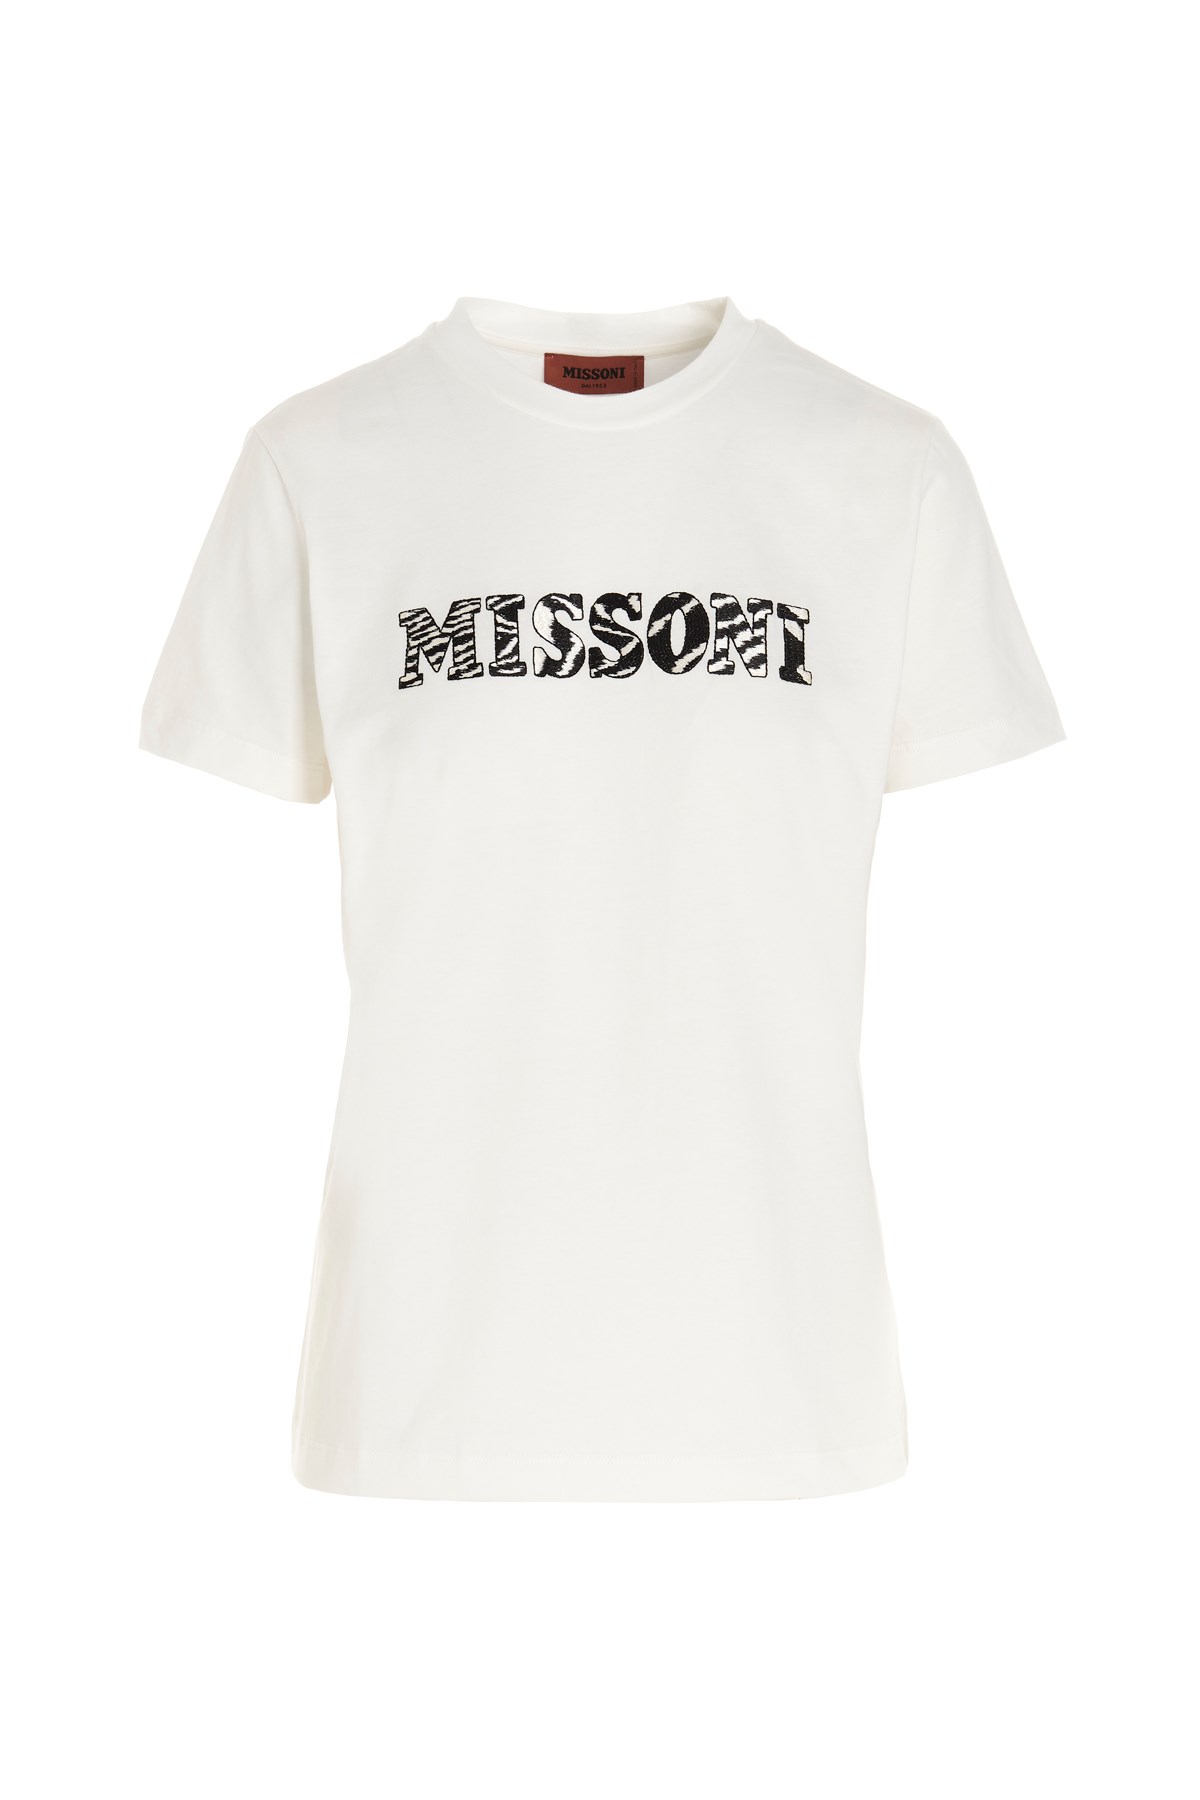 MISSONI Logo Embroidery T-Shirt